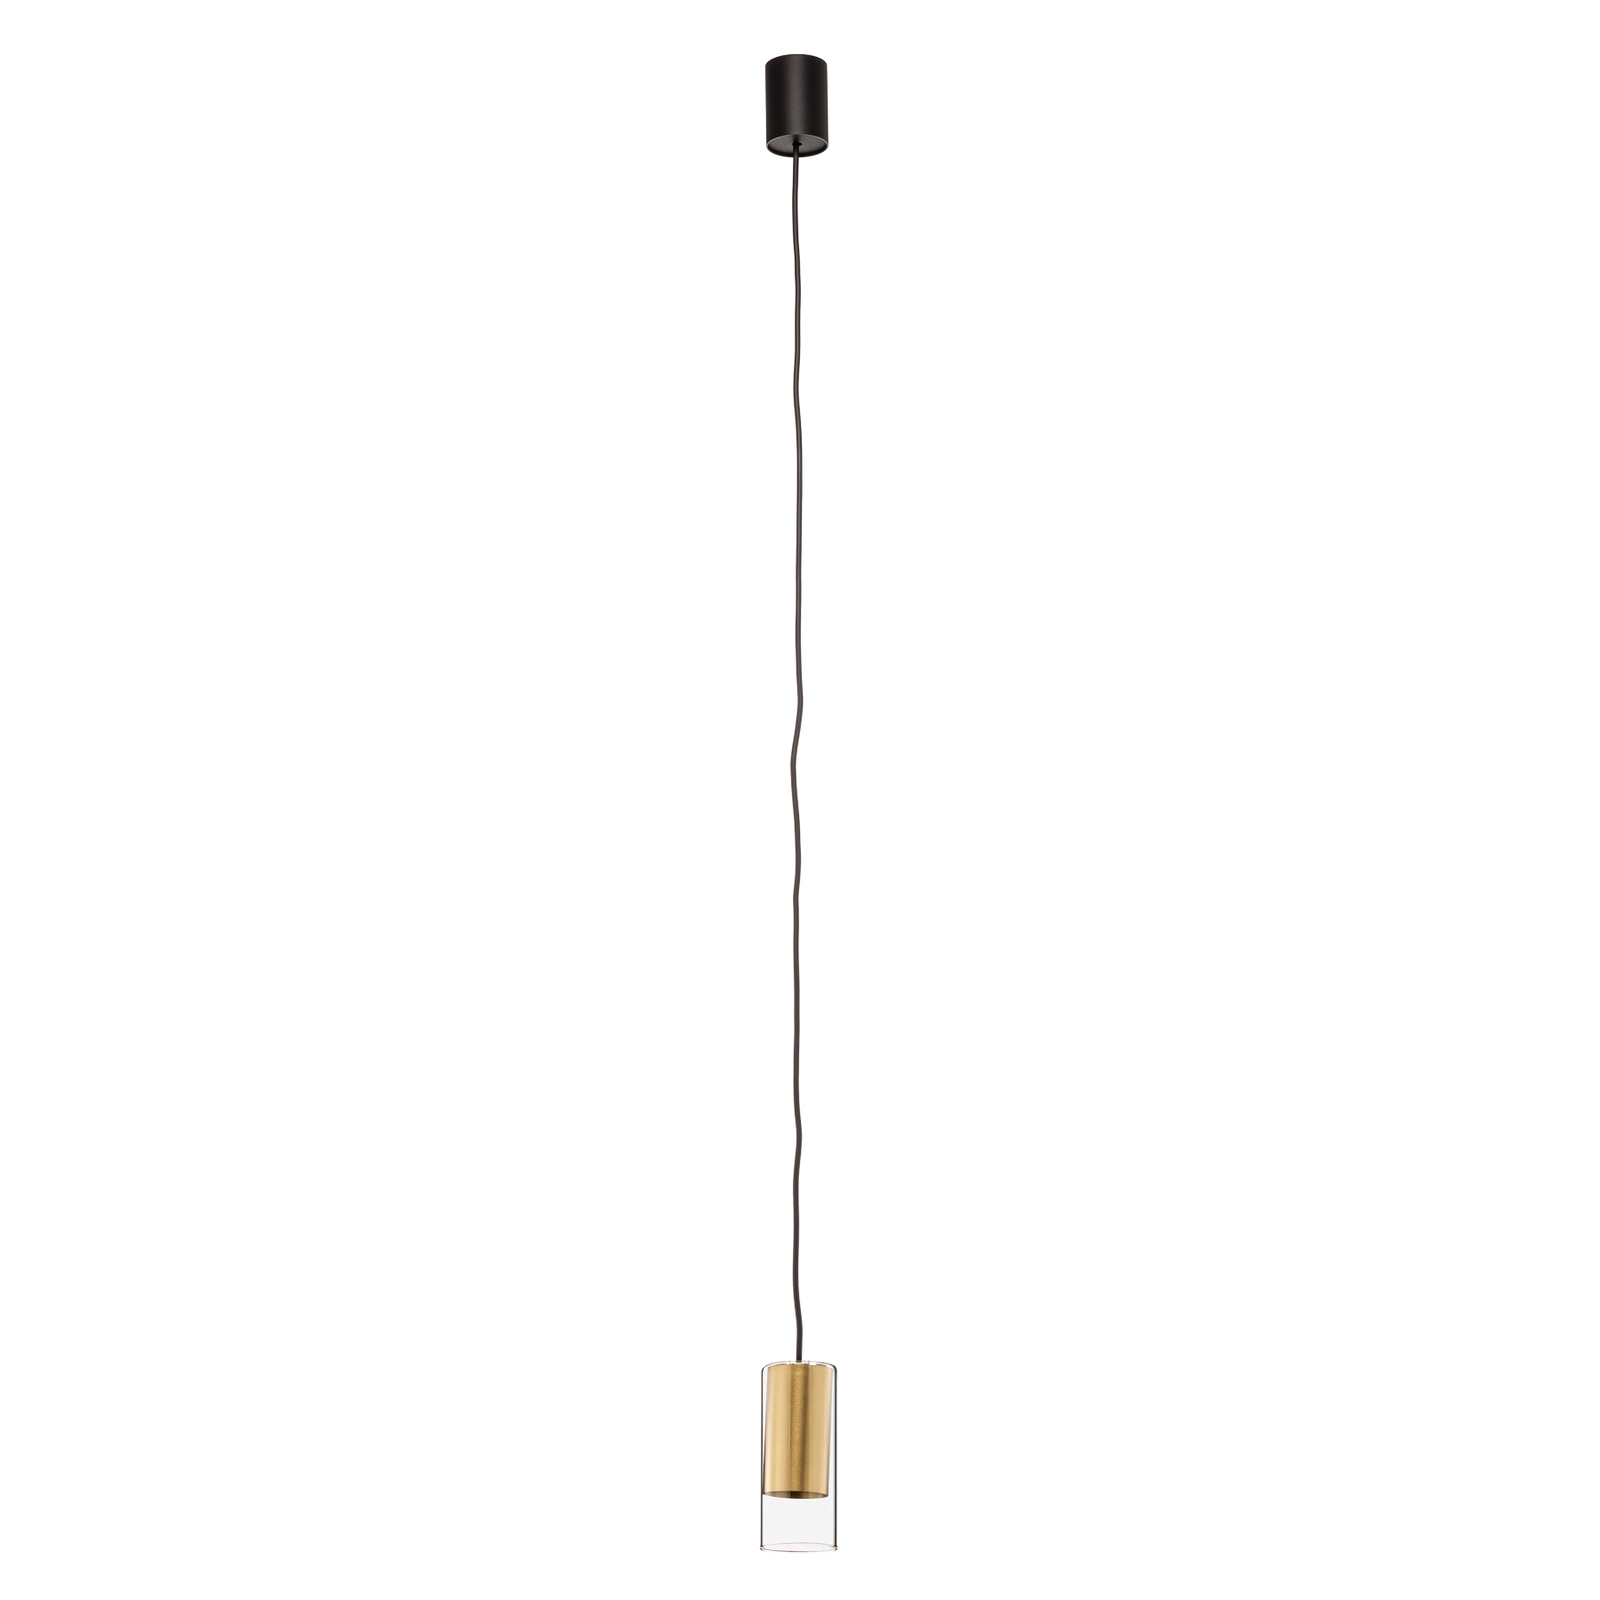 Cilinder hanglamp, helder/messing, hoogte 15 cm